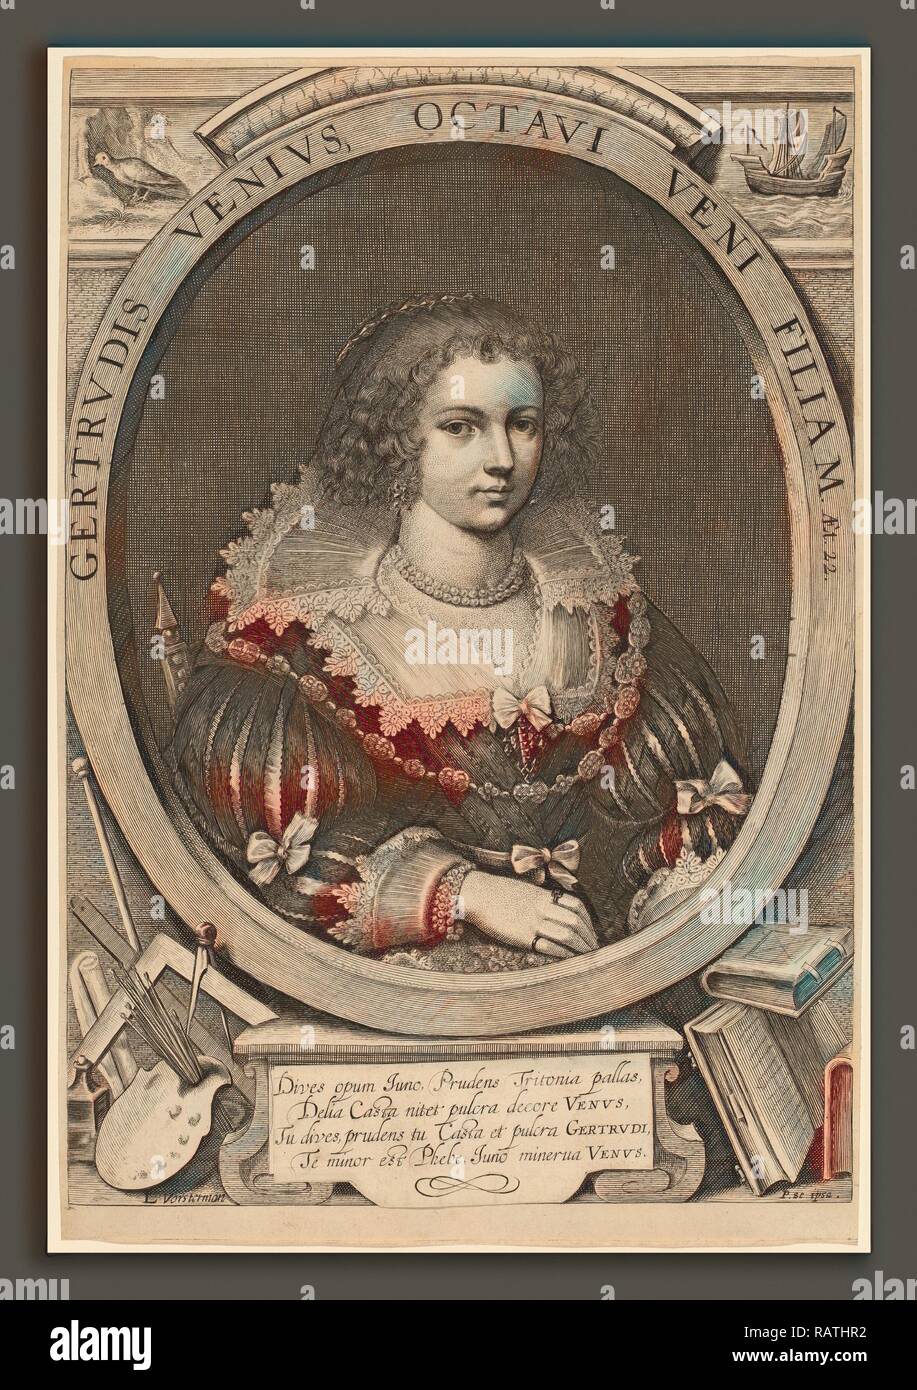 Emil Lucas Vorsterman (fiammingo, 1595 - 1675), Gertrude van Veen, incisioni su carta vergata. Reinventato Foto Stock